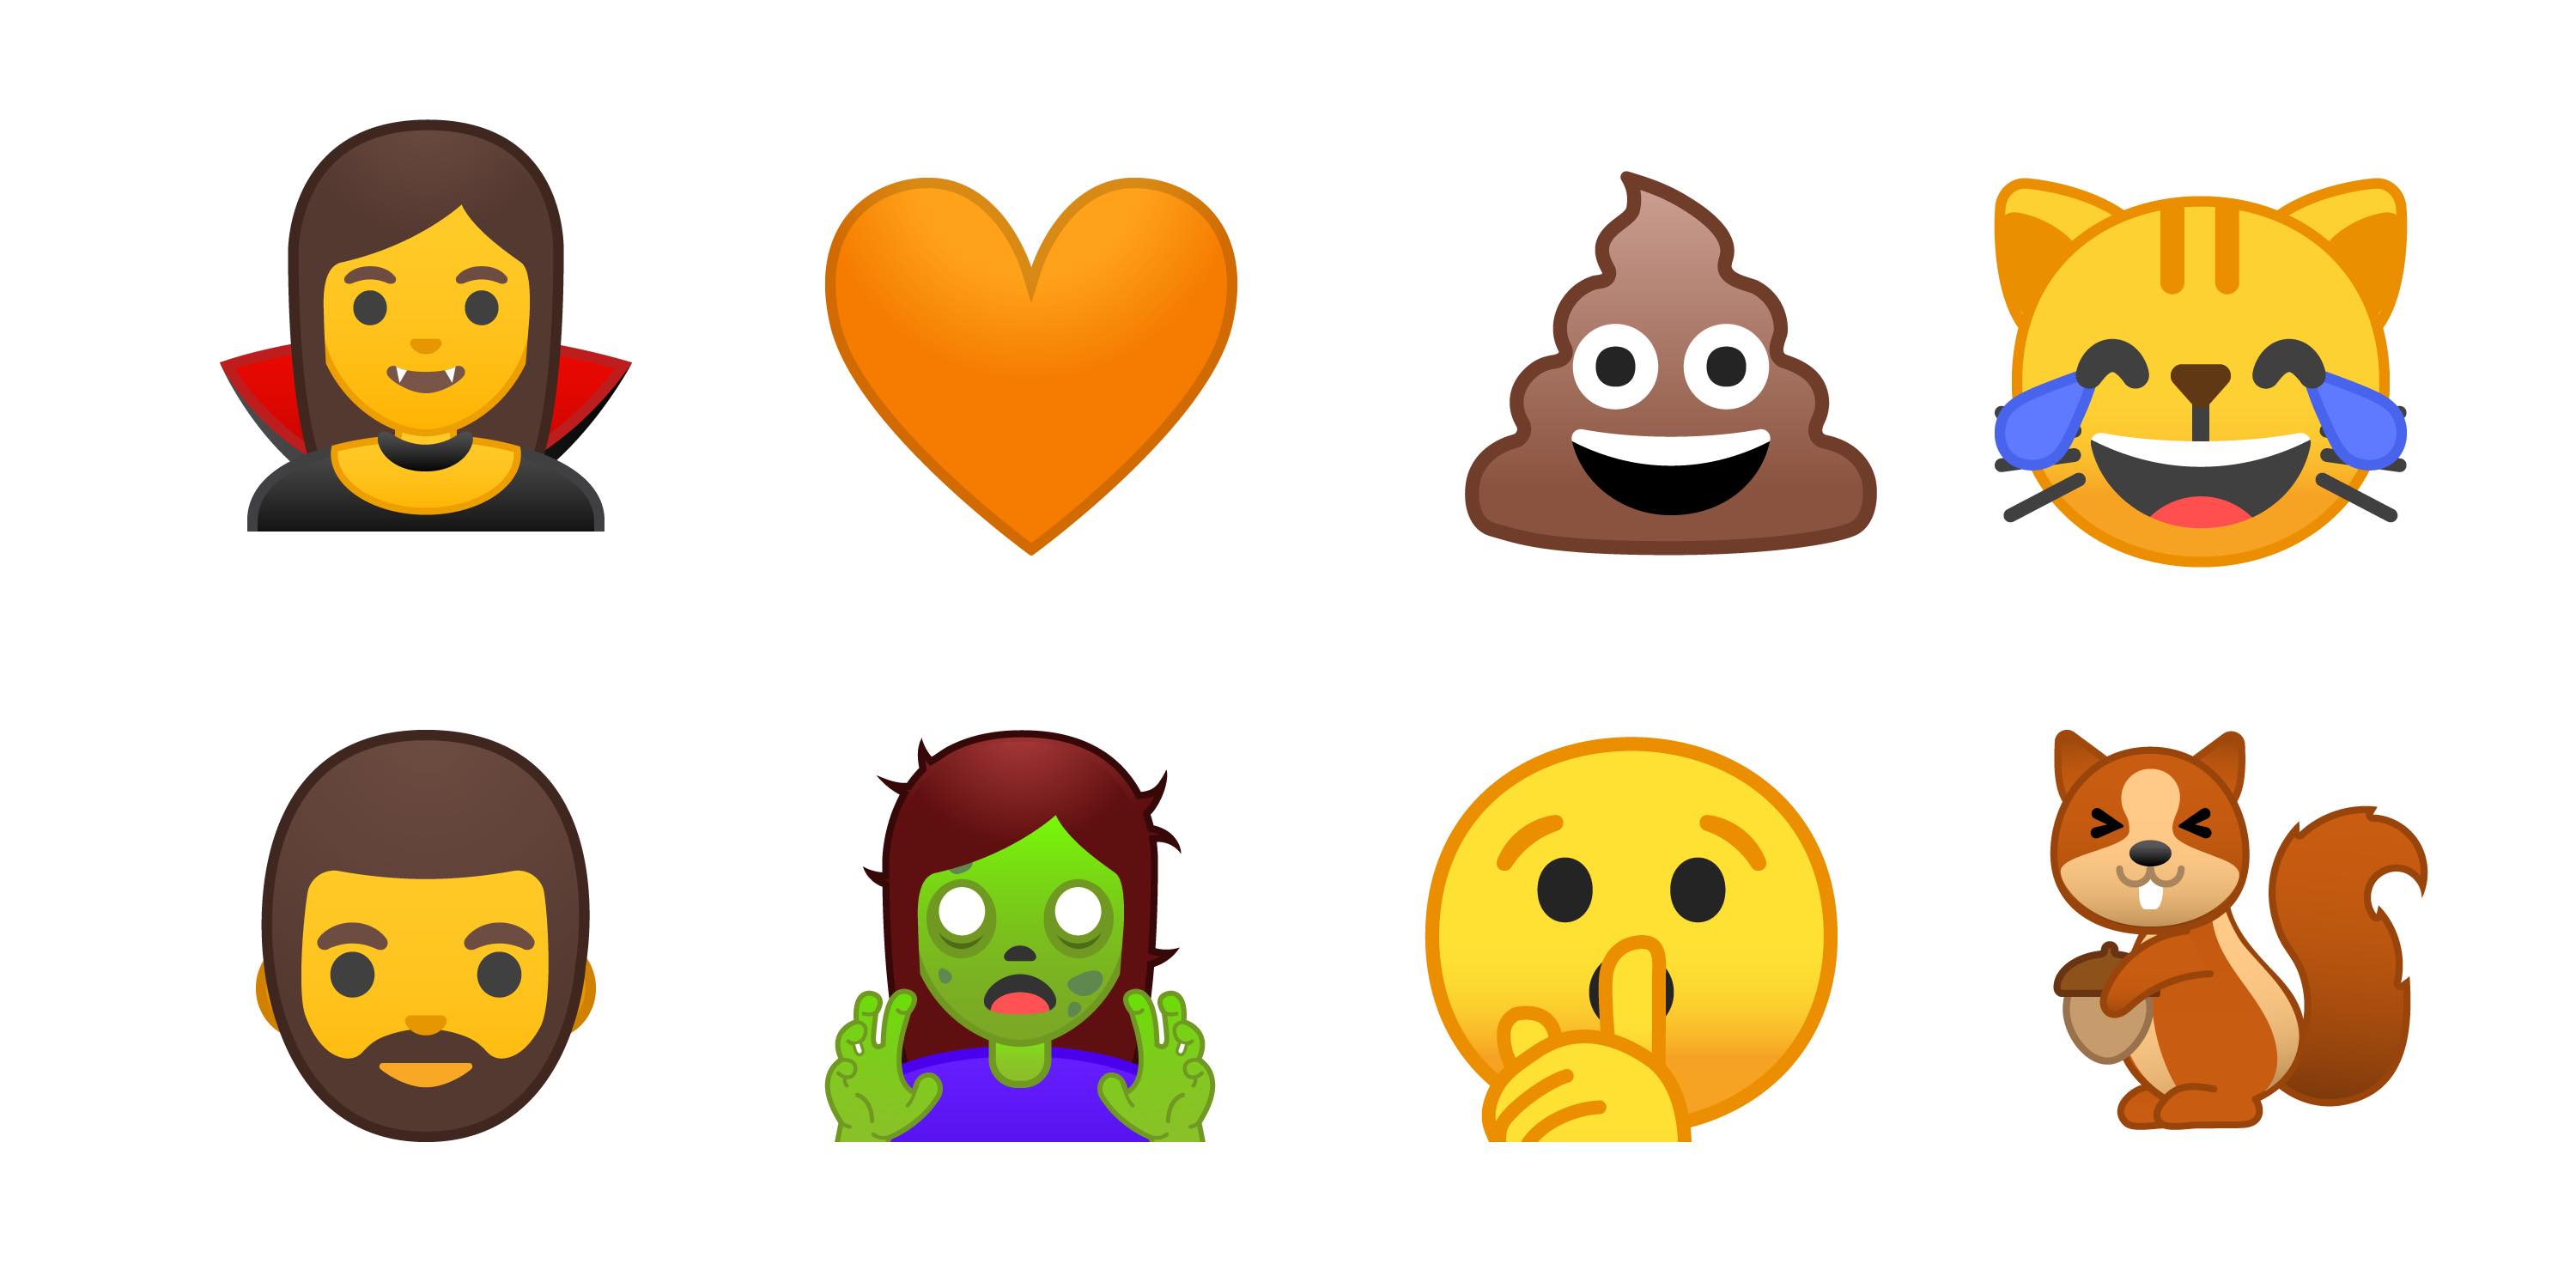 Android O emoji